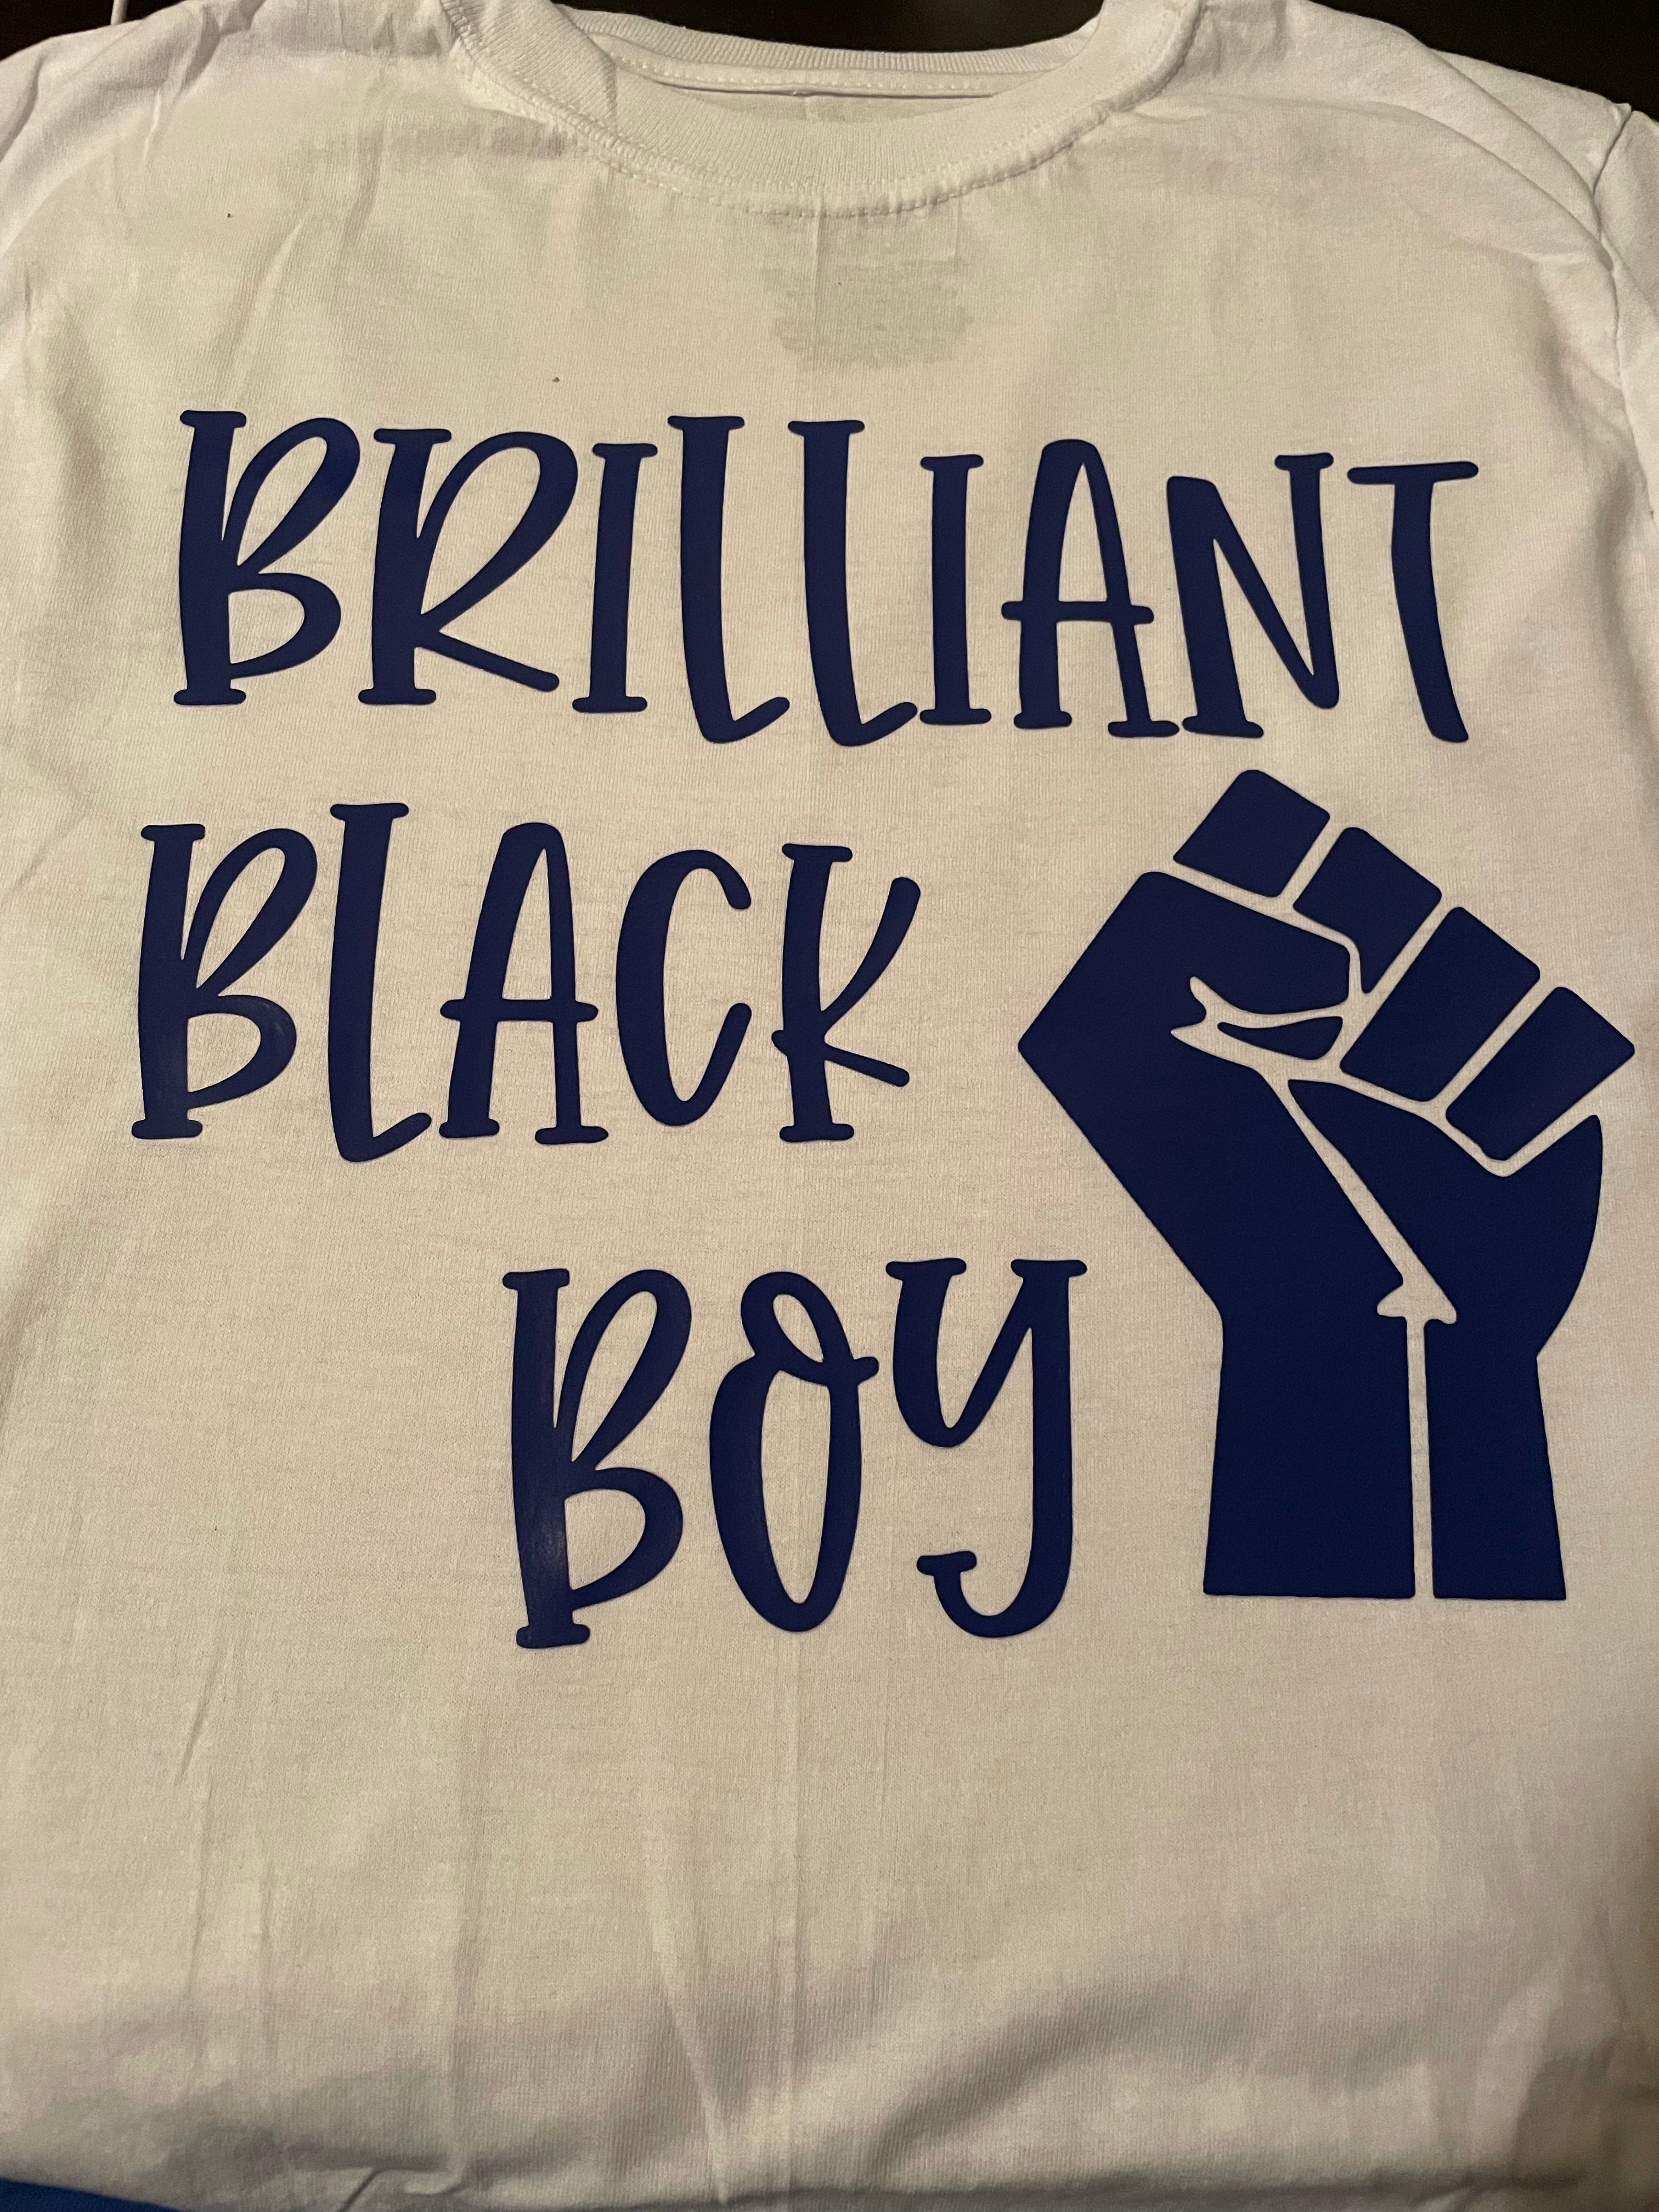 Brilliant Black Boy T-shirt